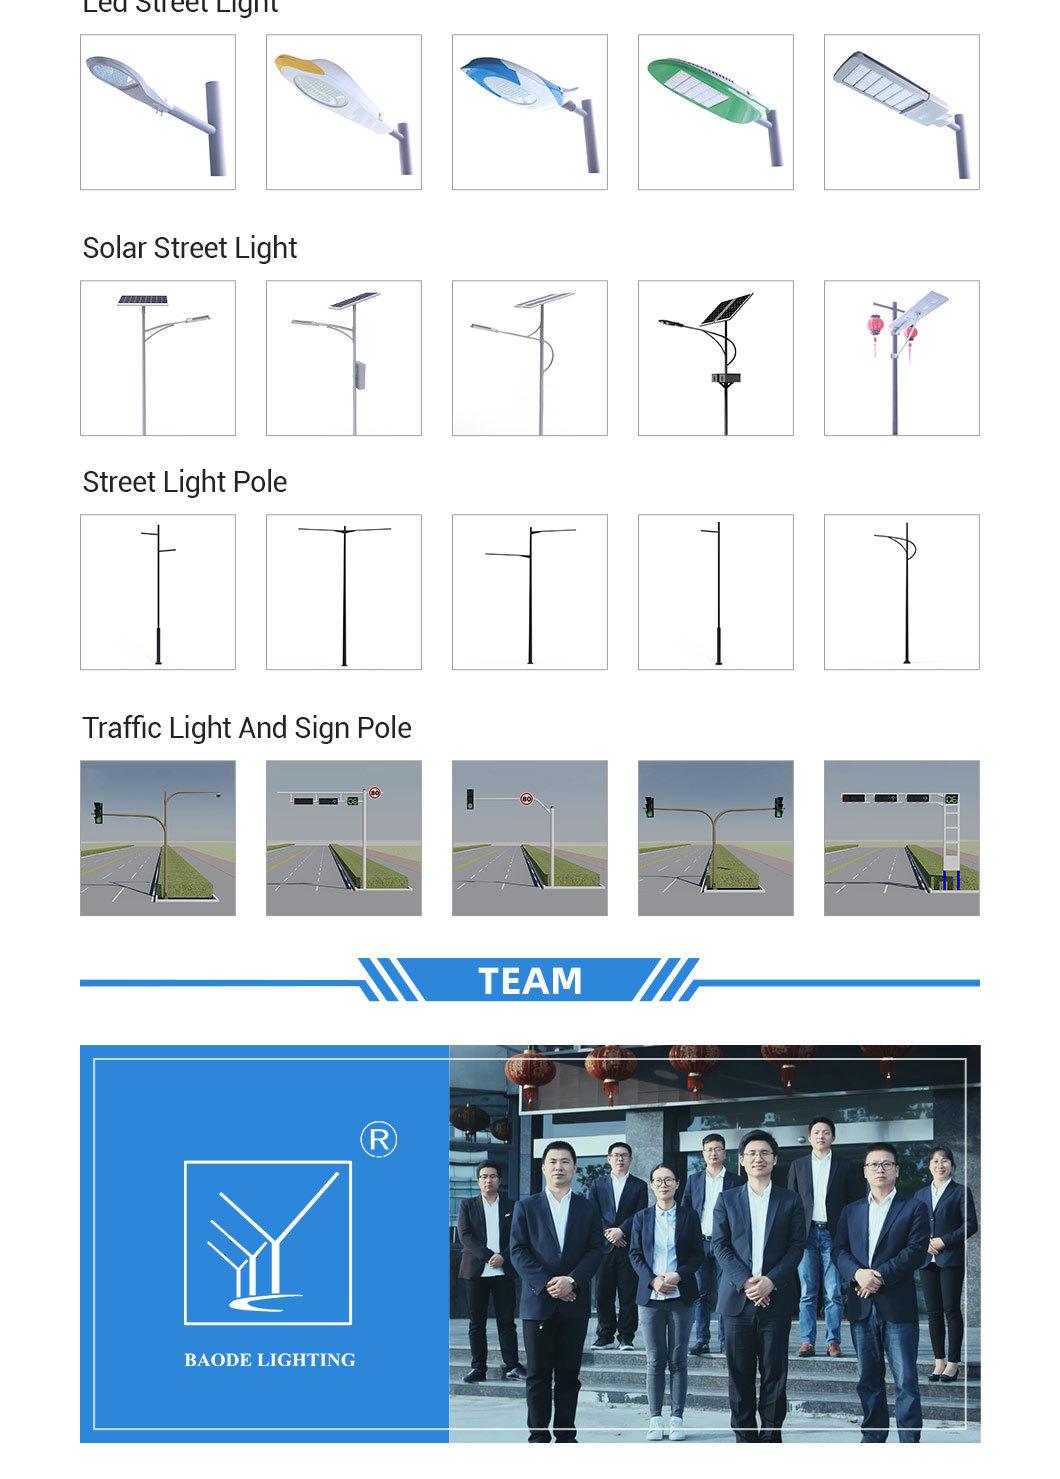 Outdoor 60-70W LED Lamp 7m Solar Street Lighting Pole